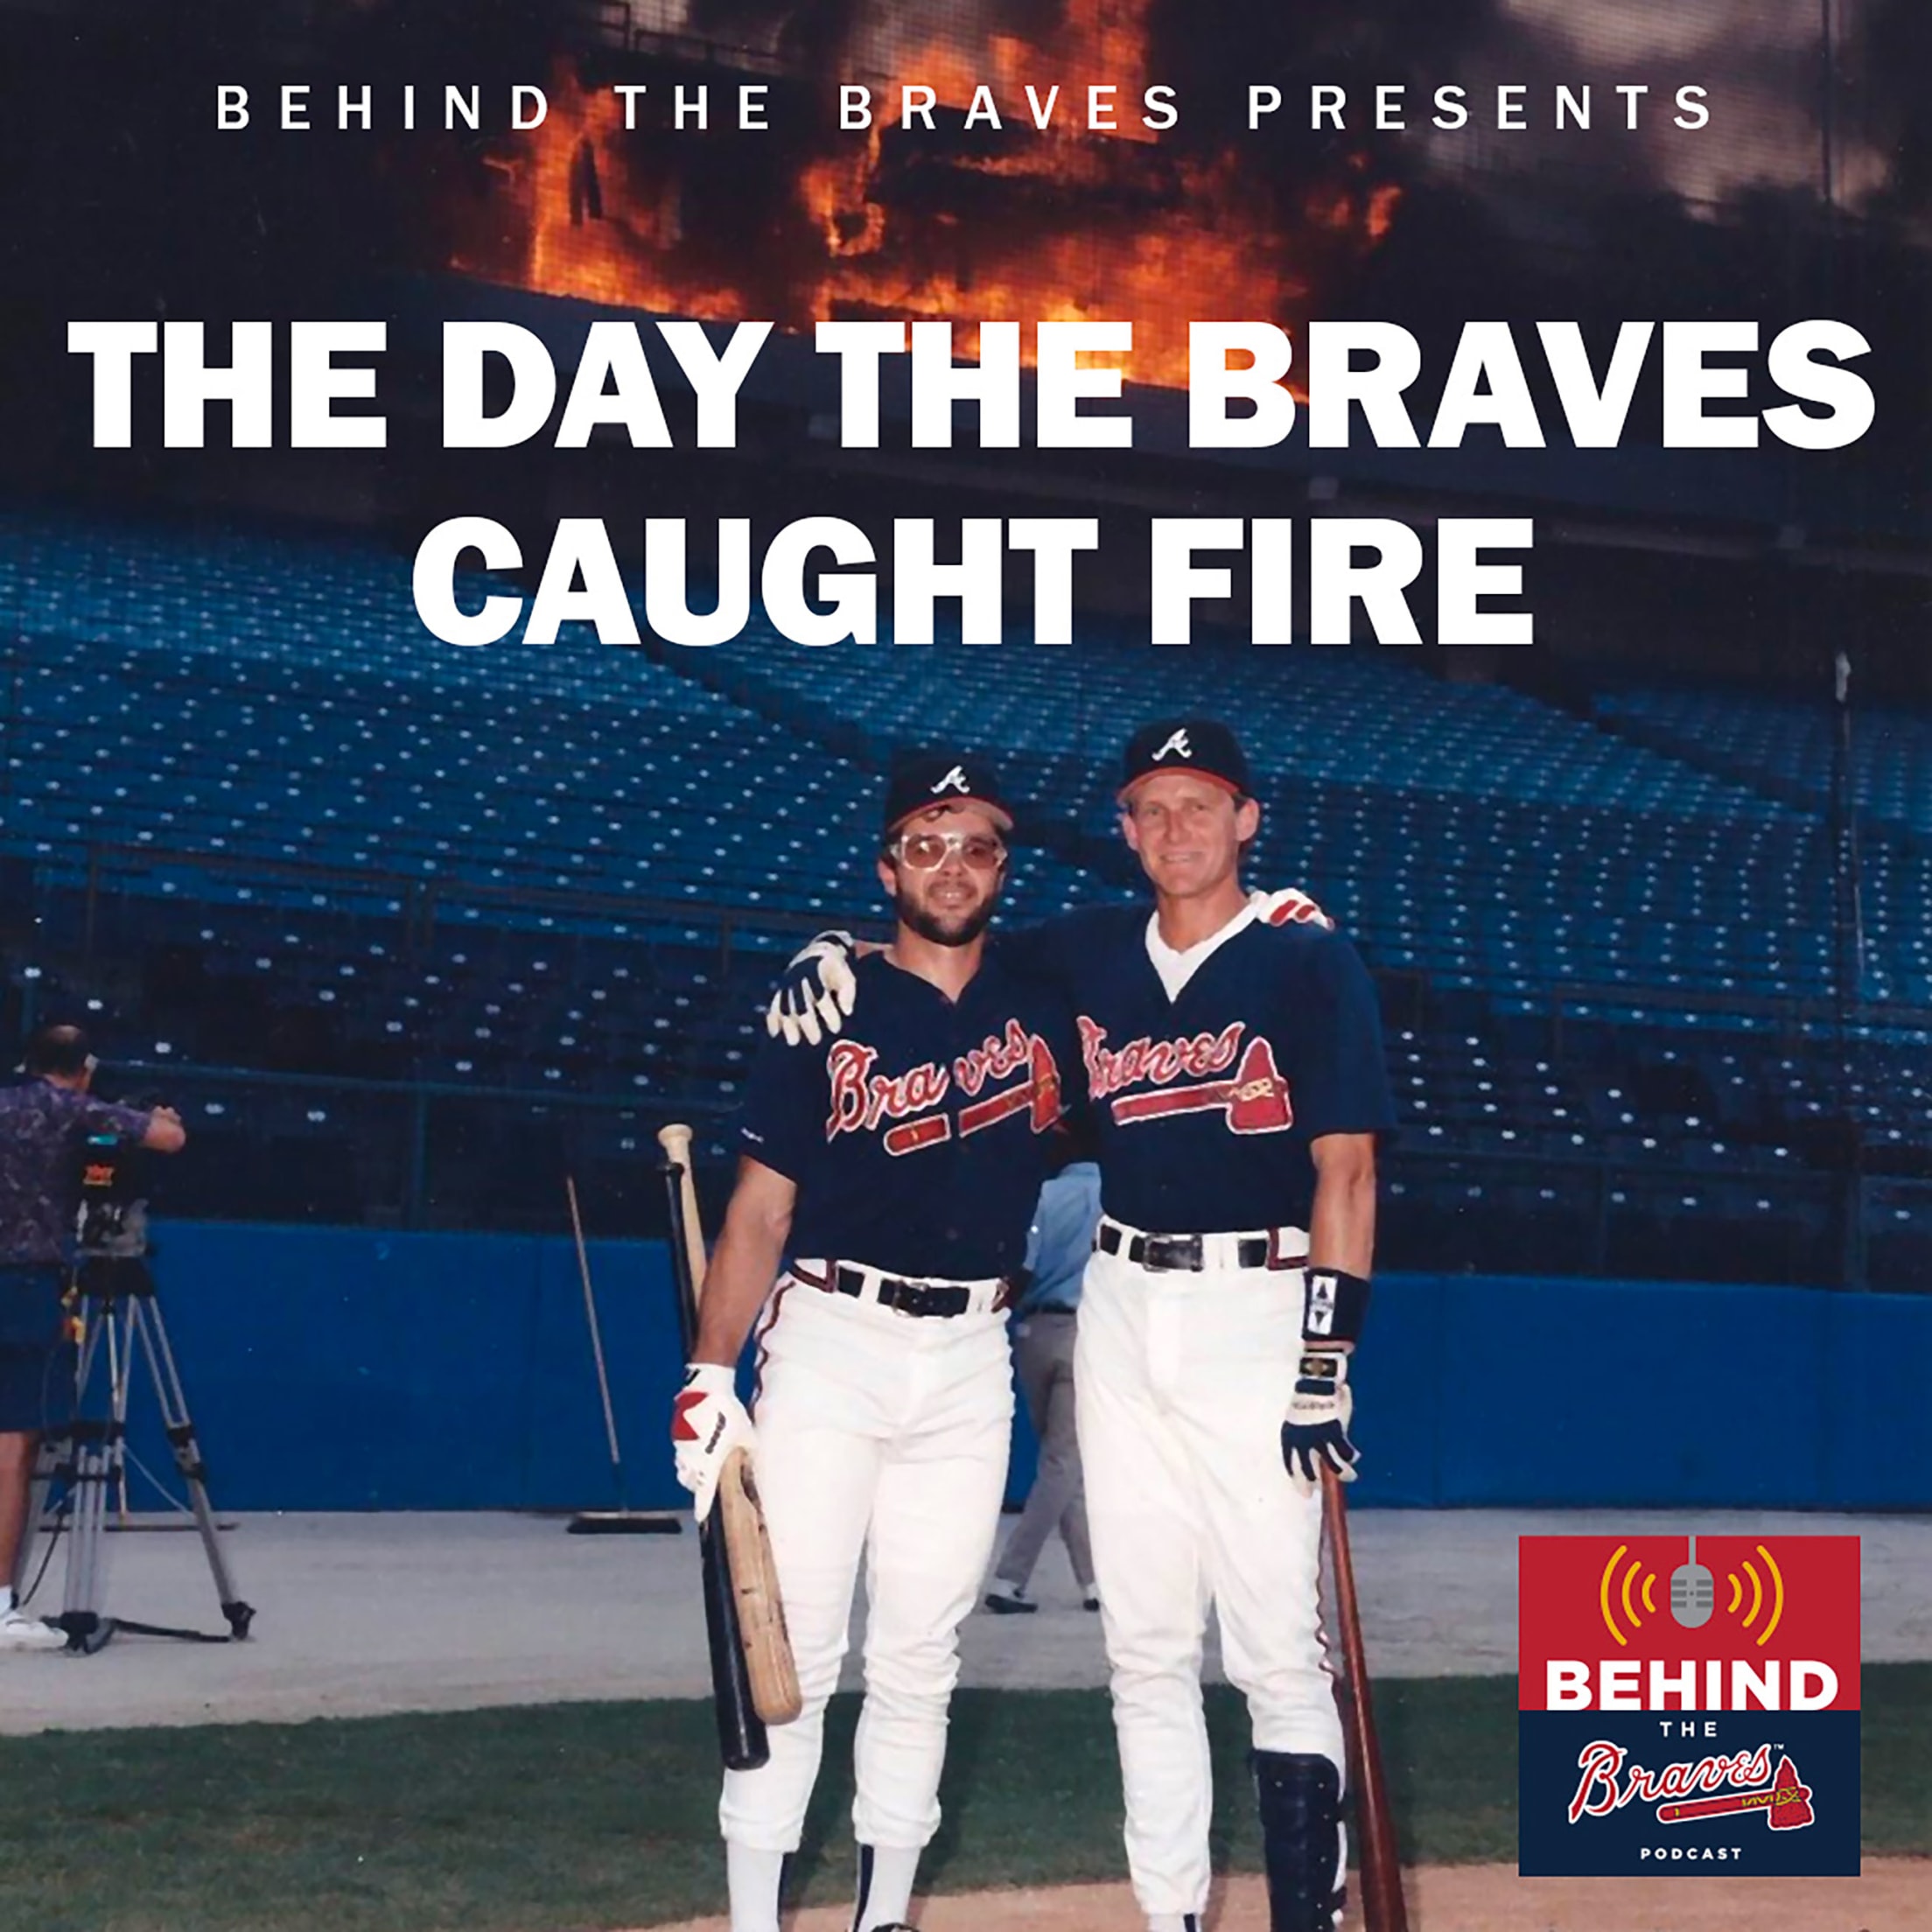 Mark Lemke throwing a - Braves Baseball Memories